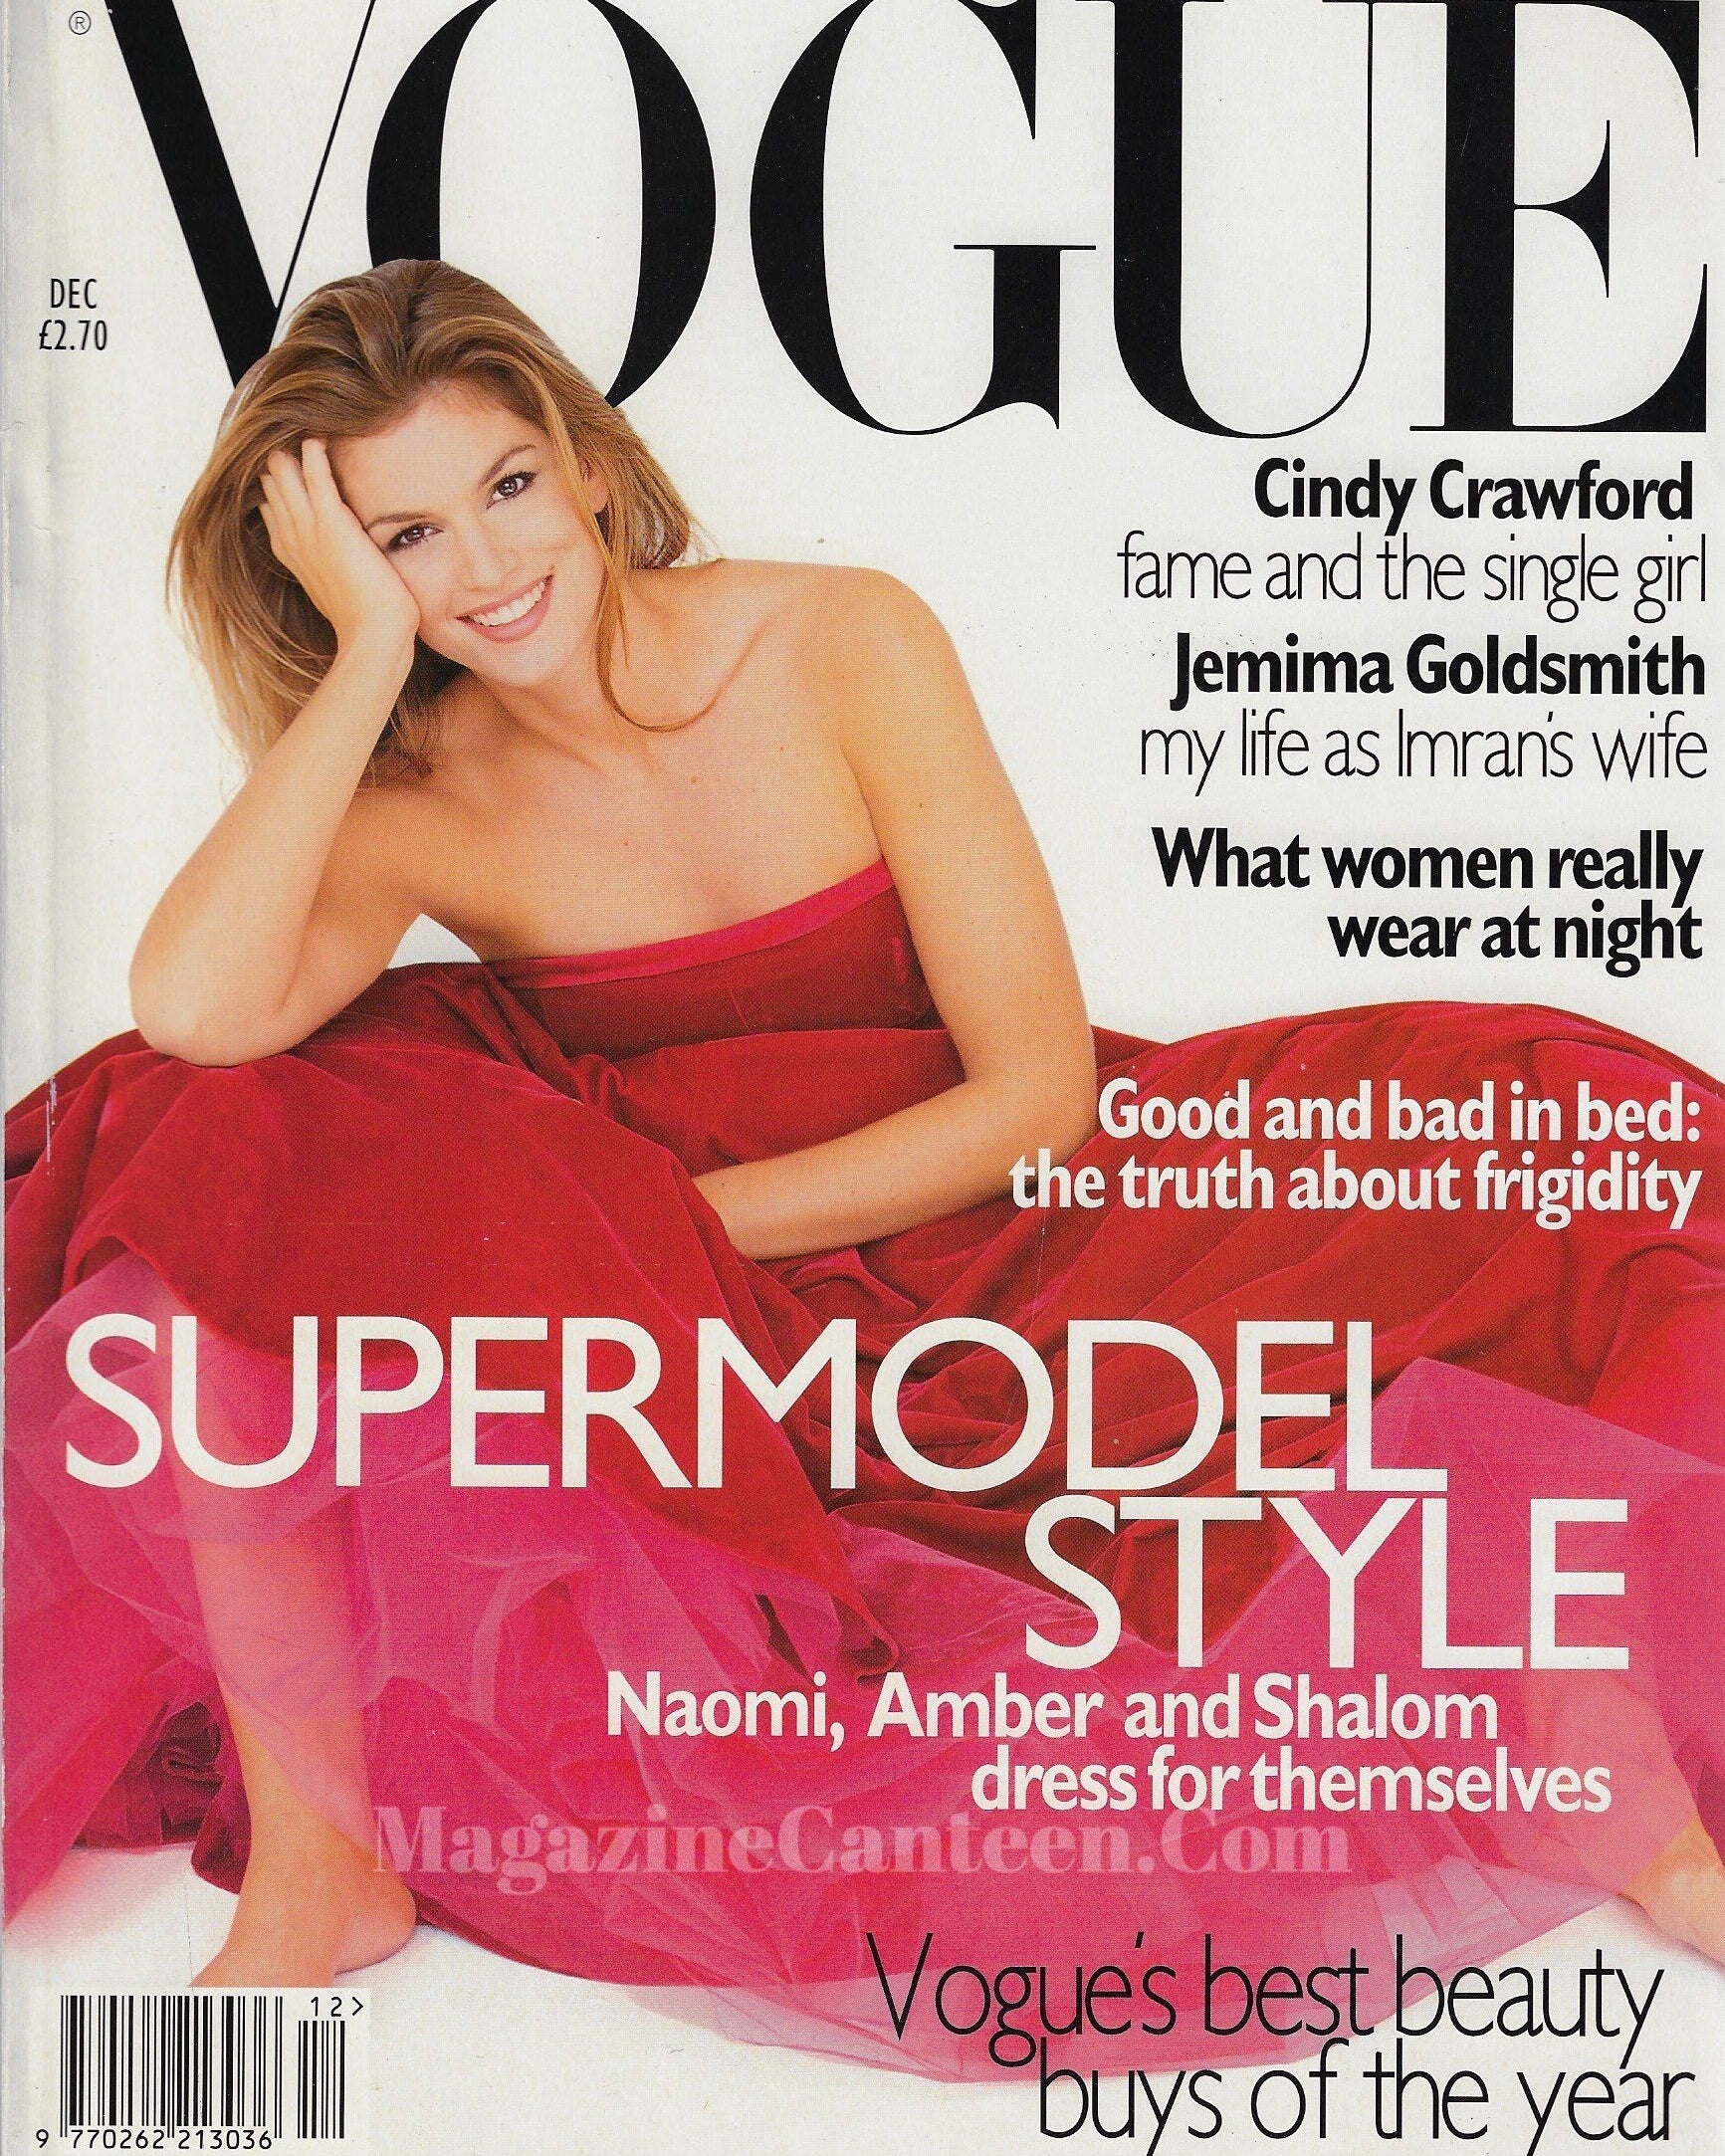 Vogue Magazine December 1995 - Cindy Crawford